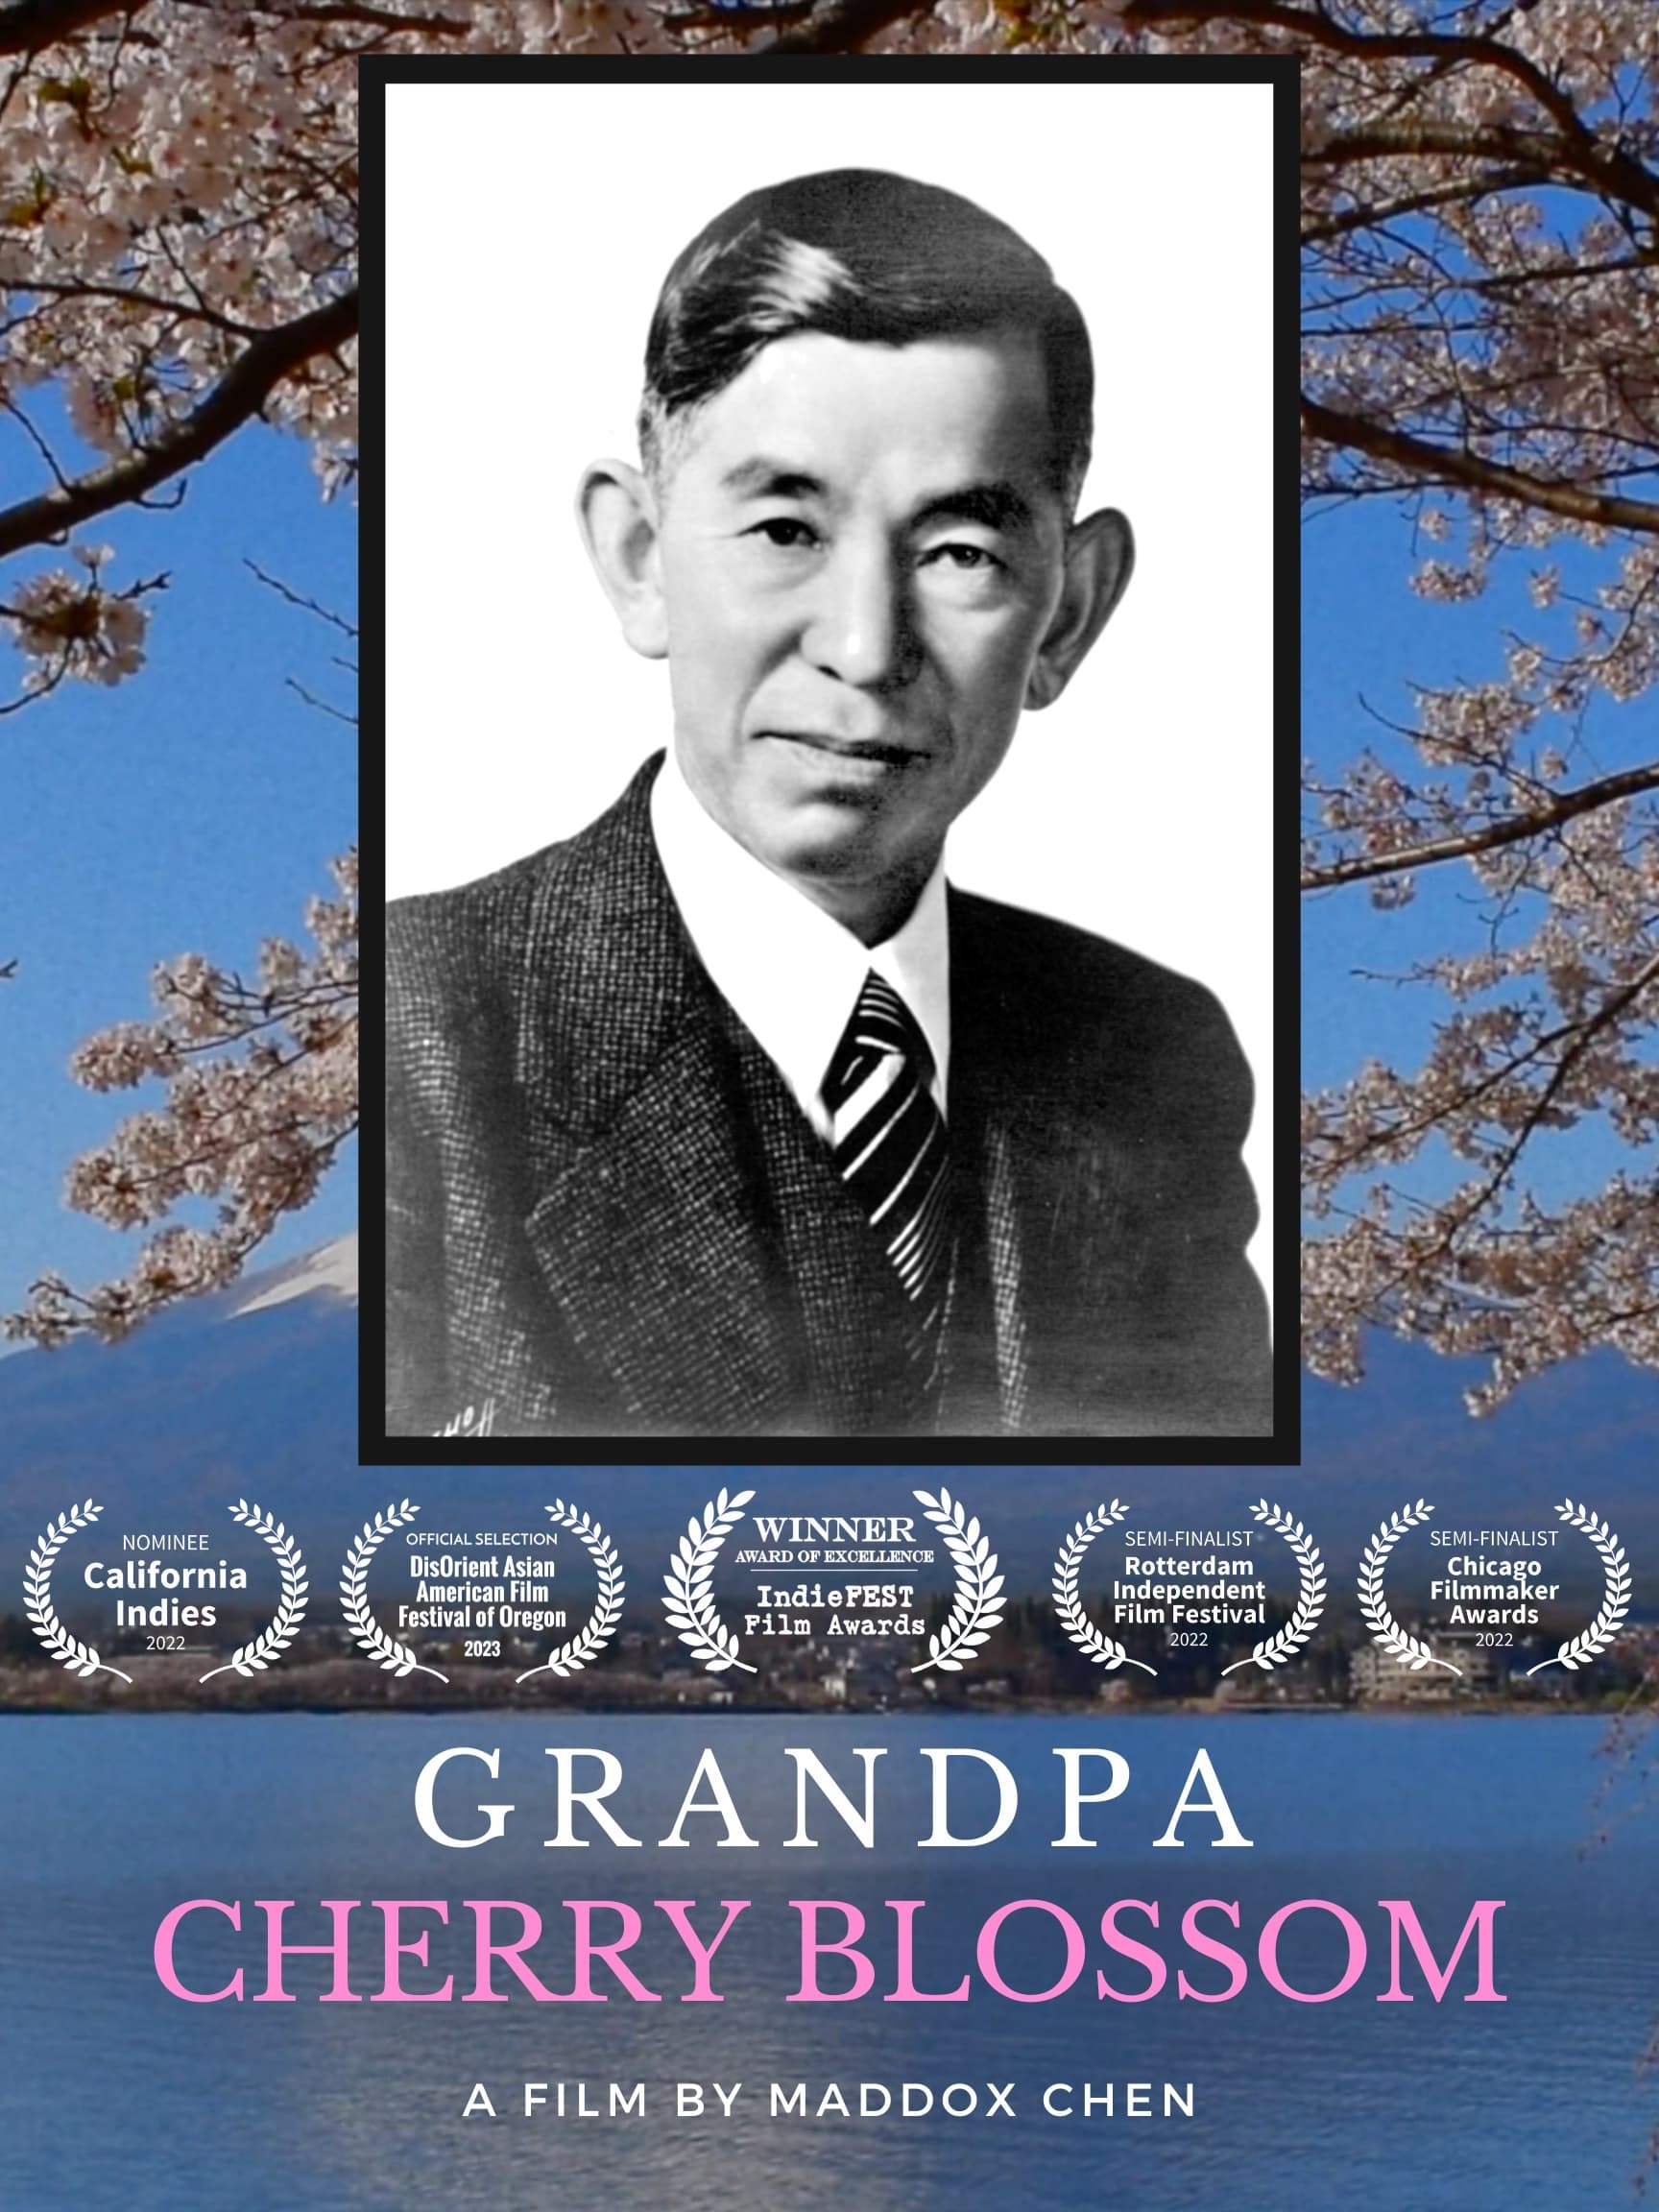 Grandpa Cherry Blossom